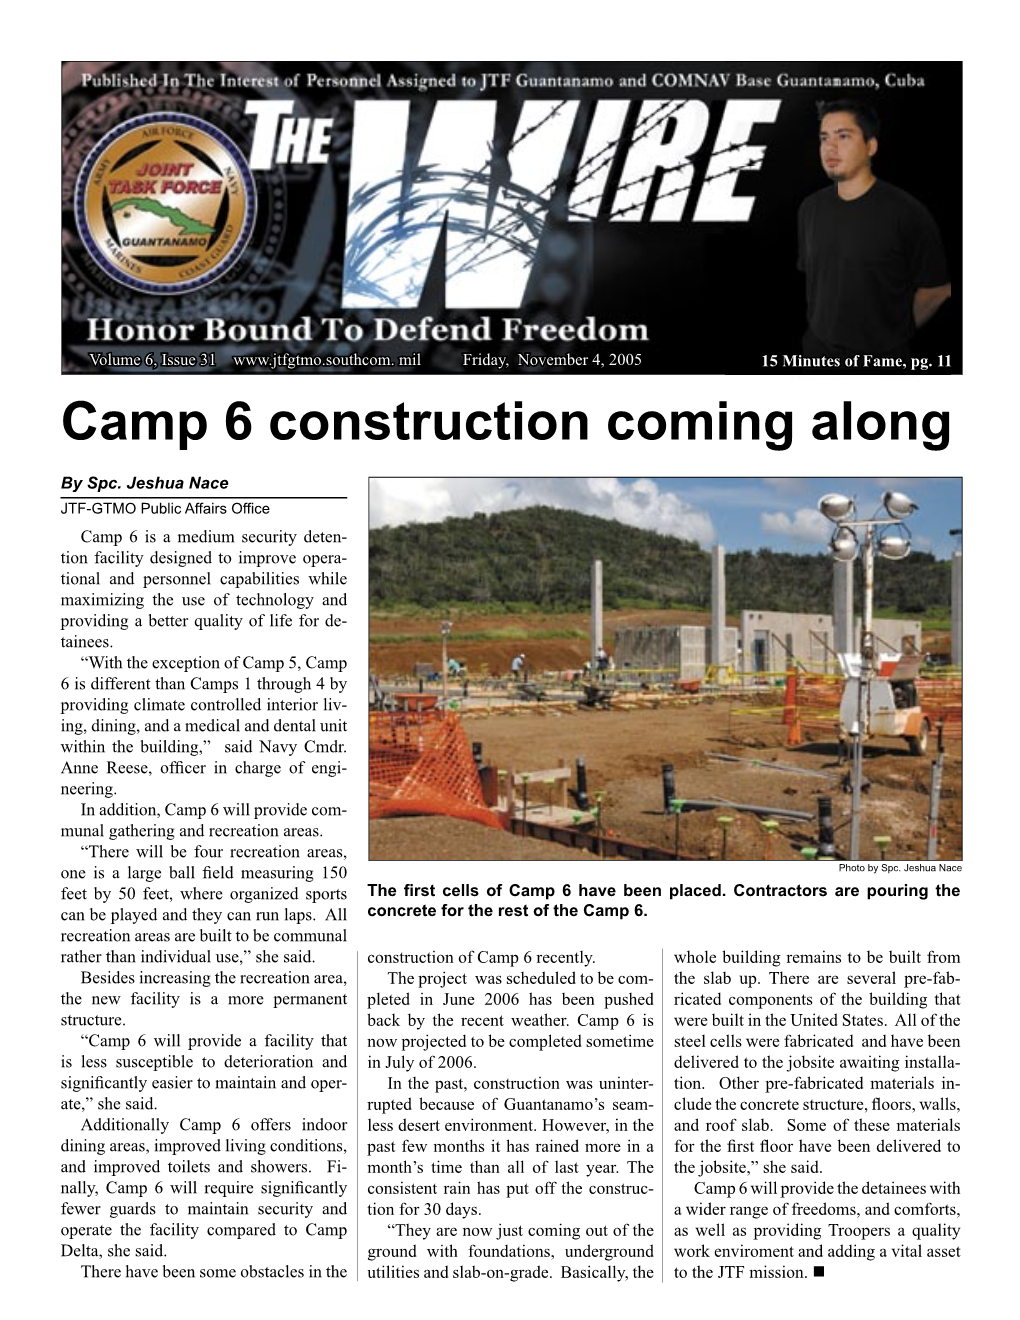 Camp 6 Construction Coming Along